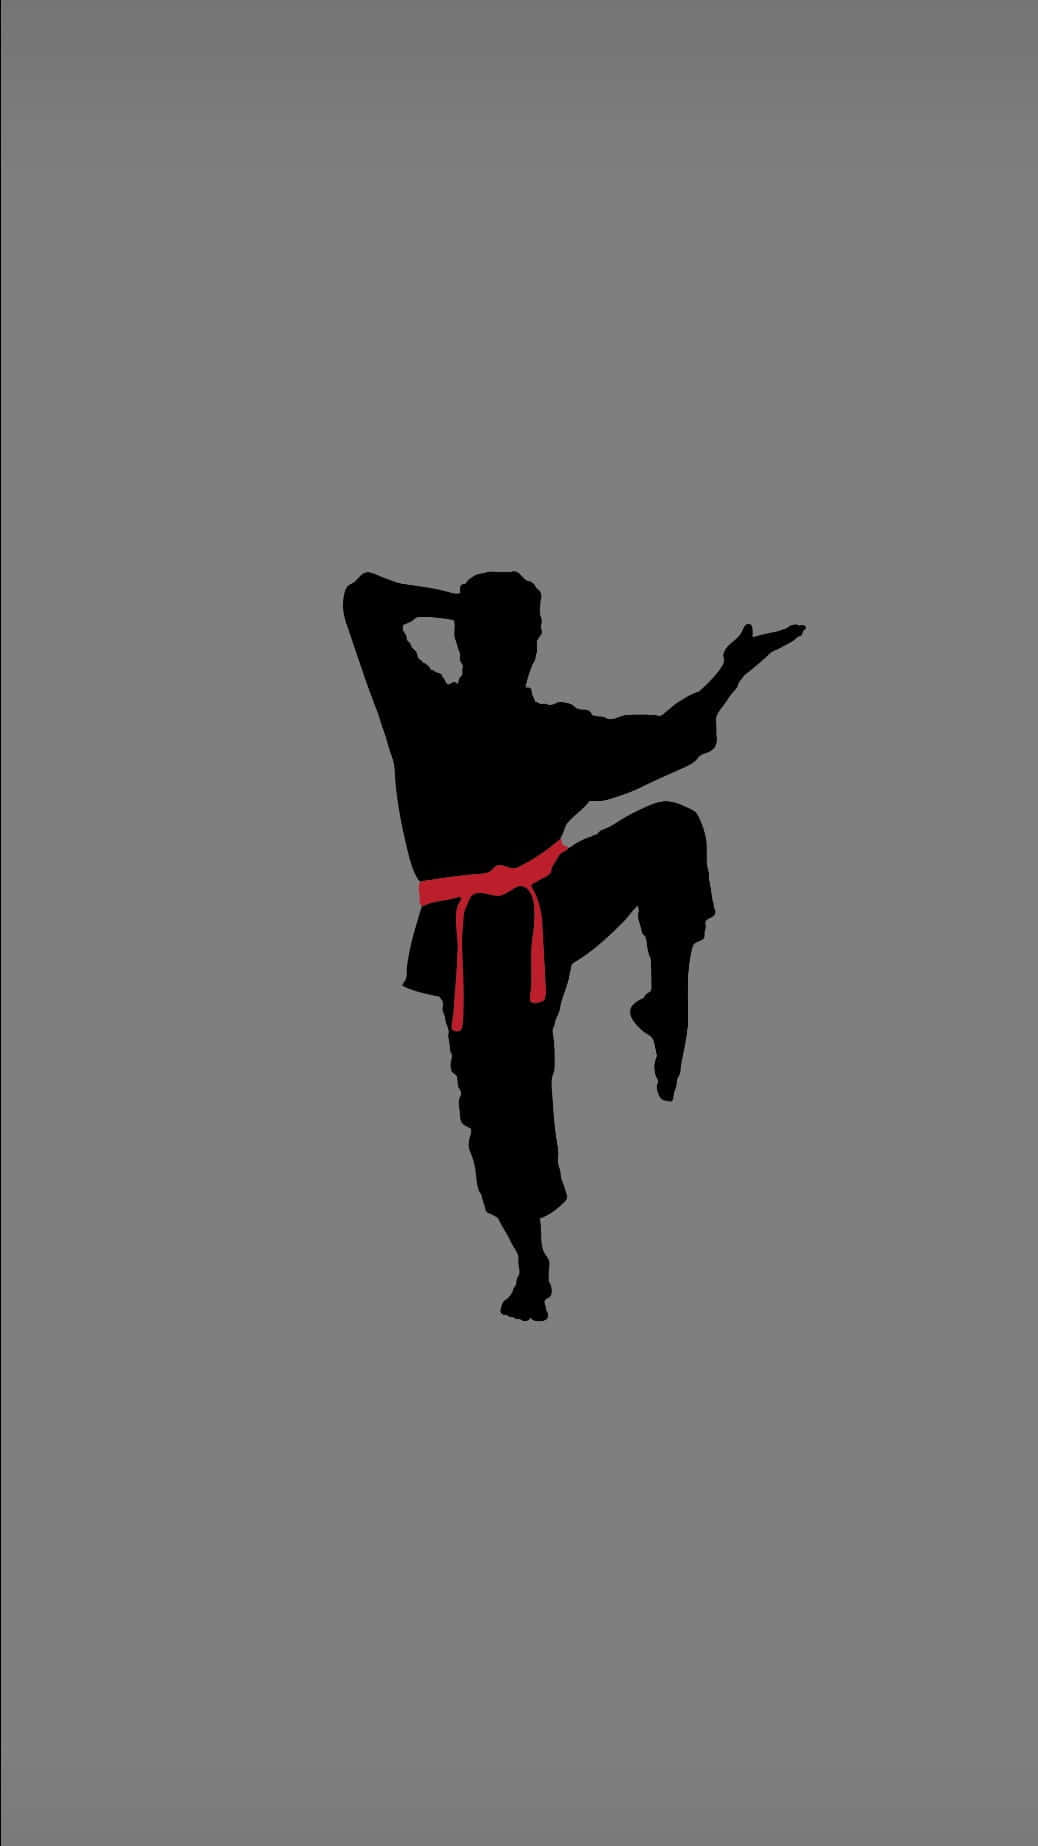 A Silhouette Of A Karate Man Doing A Kick